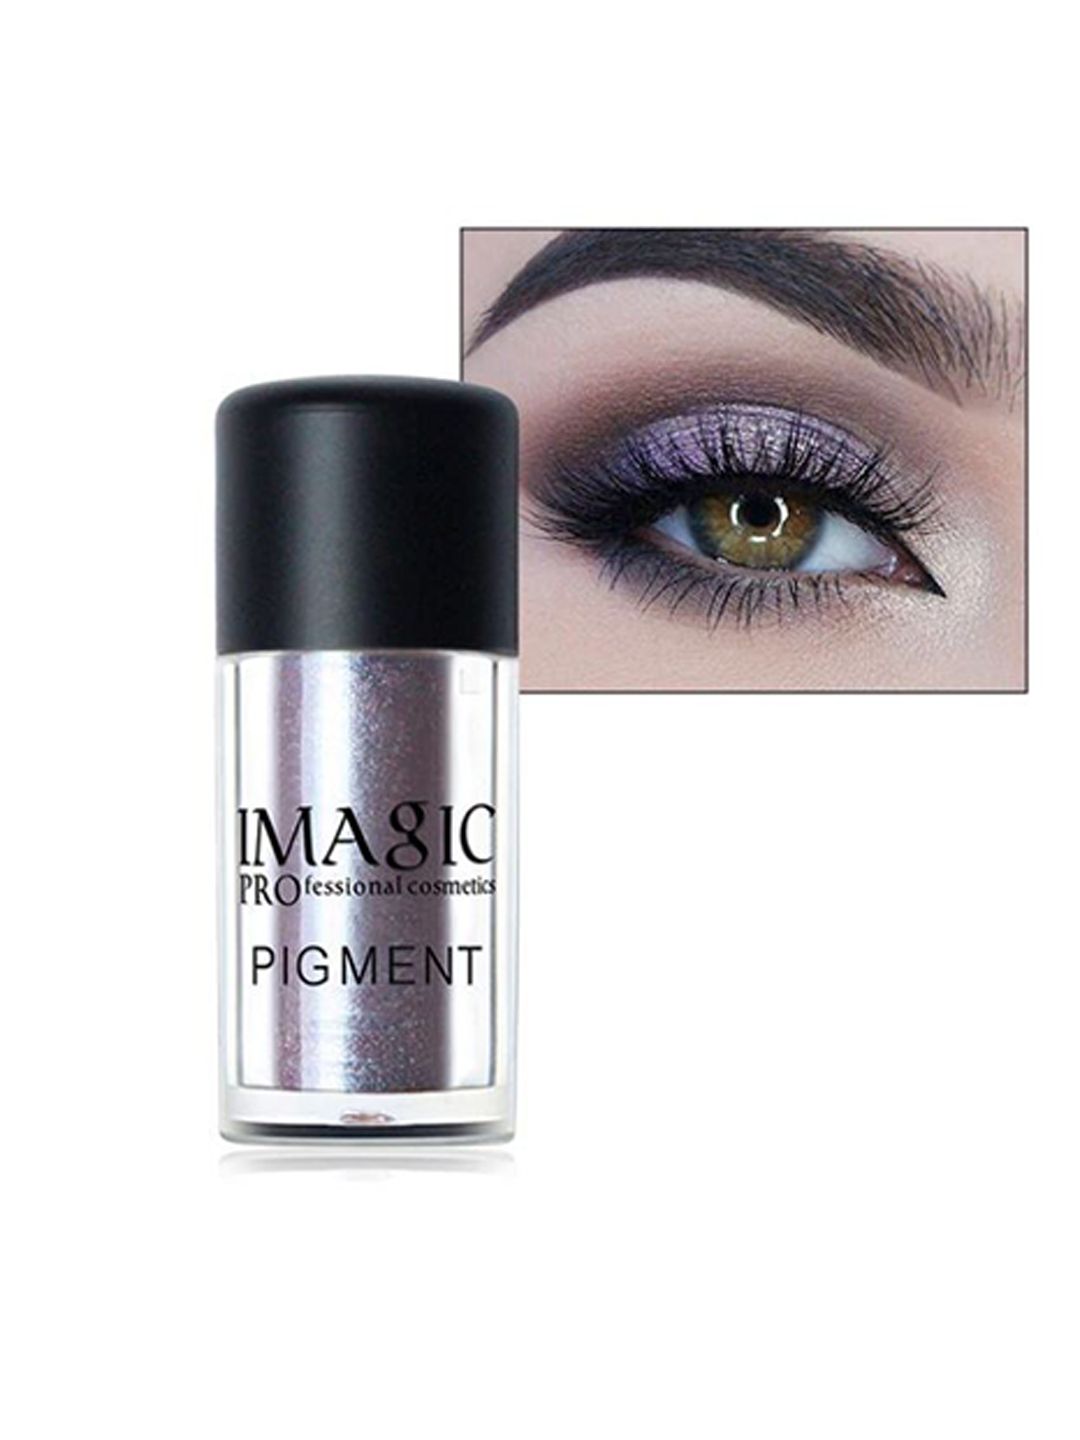 IMAGIC Professional Cosmetics Pigment Loose Powder Eyeshadow - P9 Forever Love Price in India